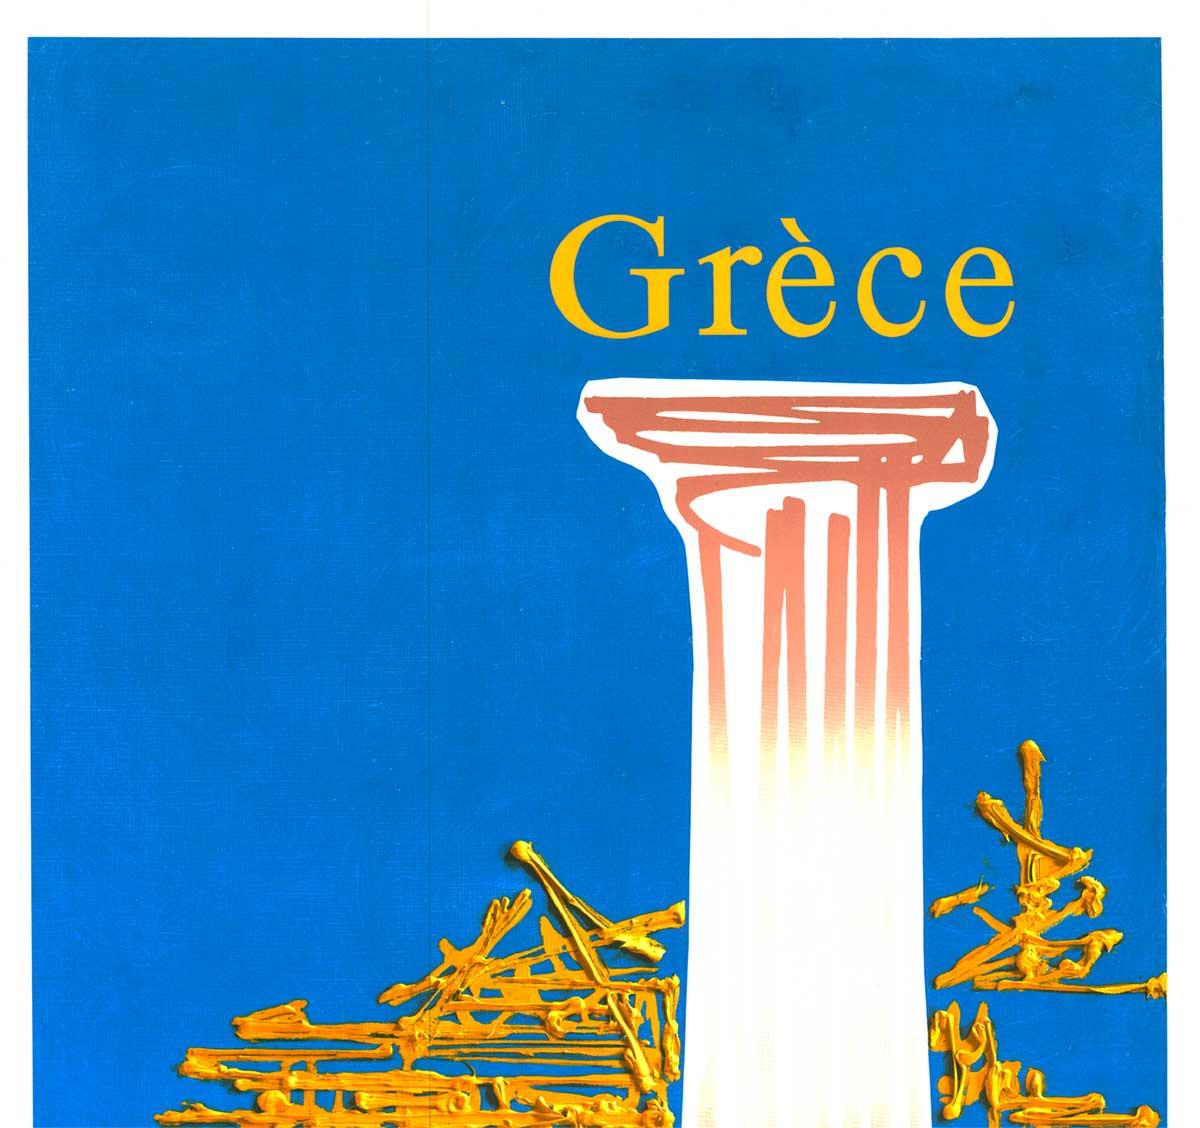 Original Air France Greece (Grece) vintage travel poster - Print by Georges Mathieu